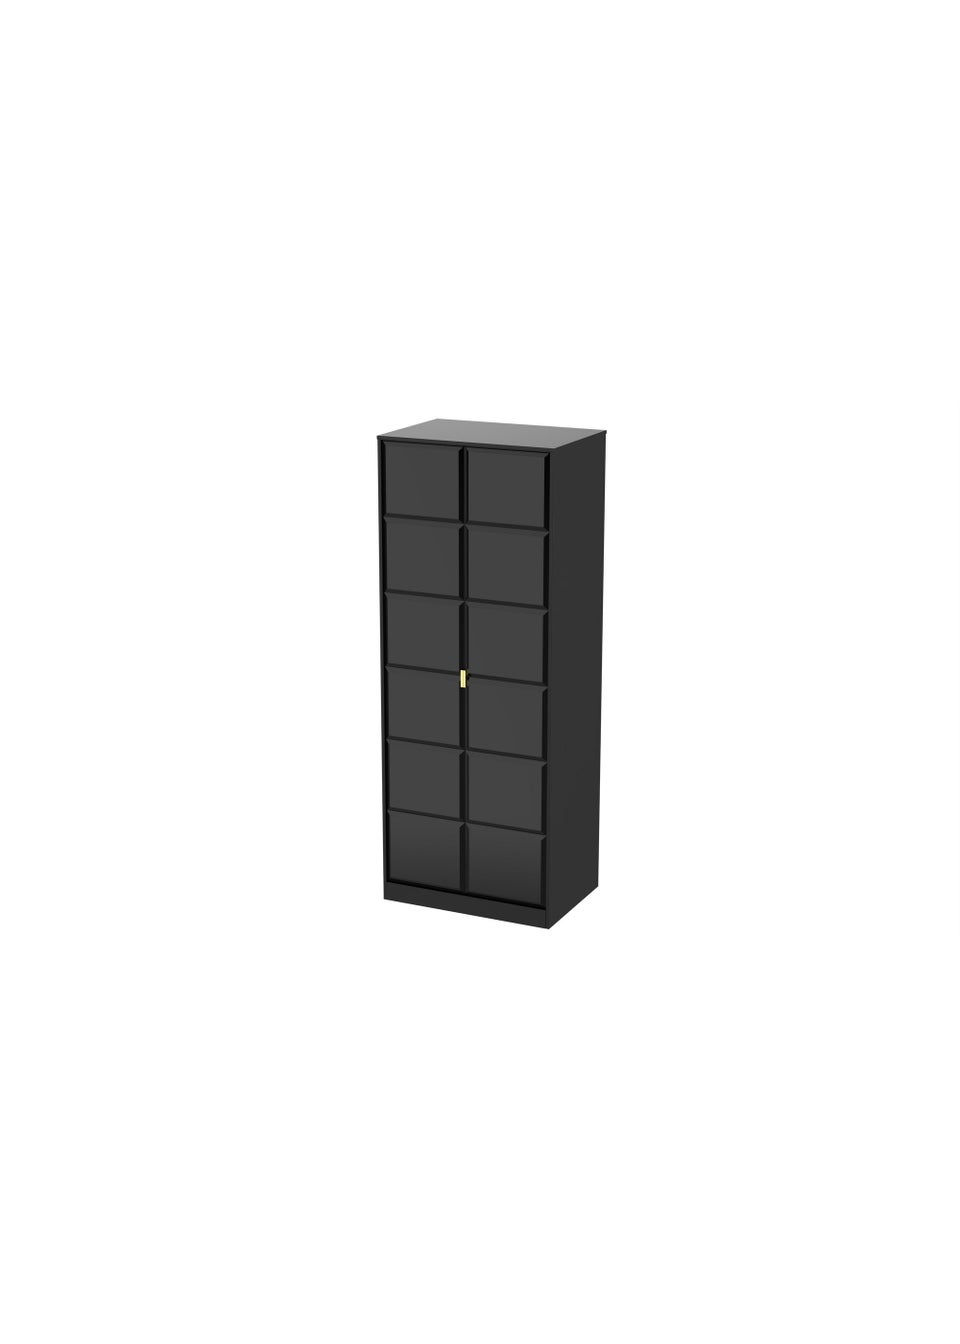 Swift Cube 2 Door Tall Wardrobe (197cm x 74cm x 53cm)